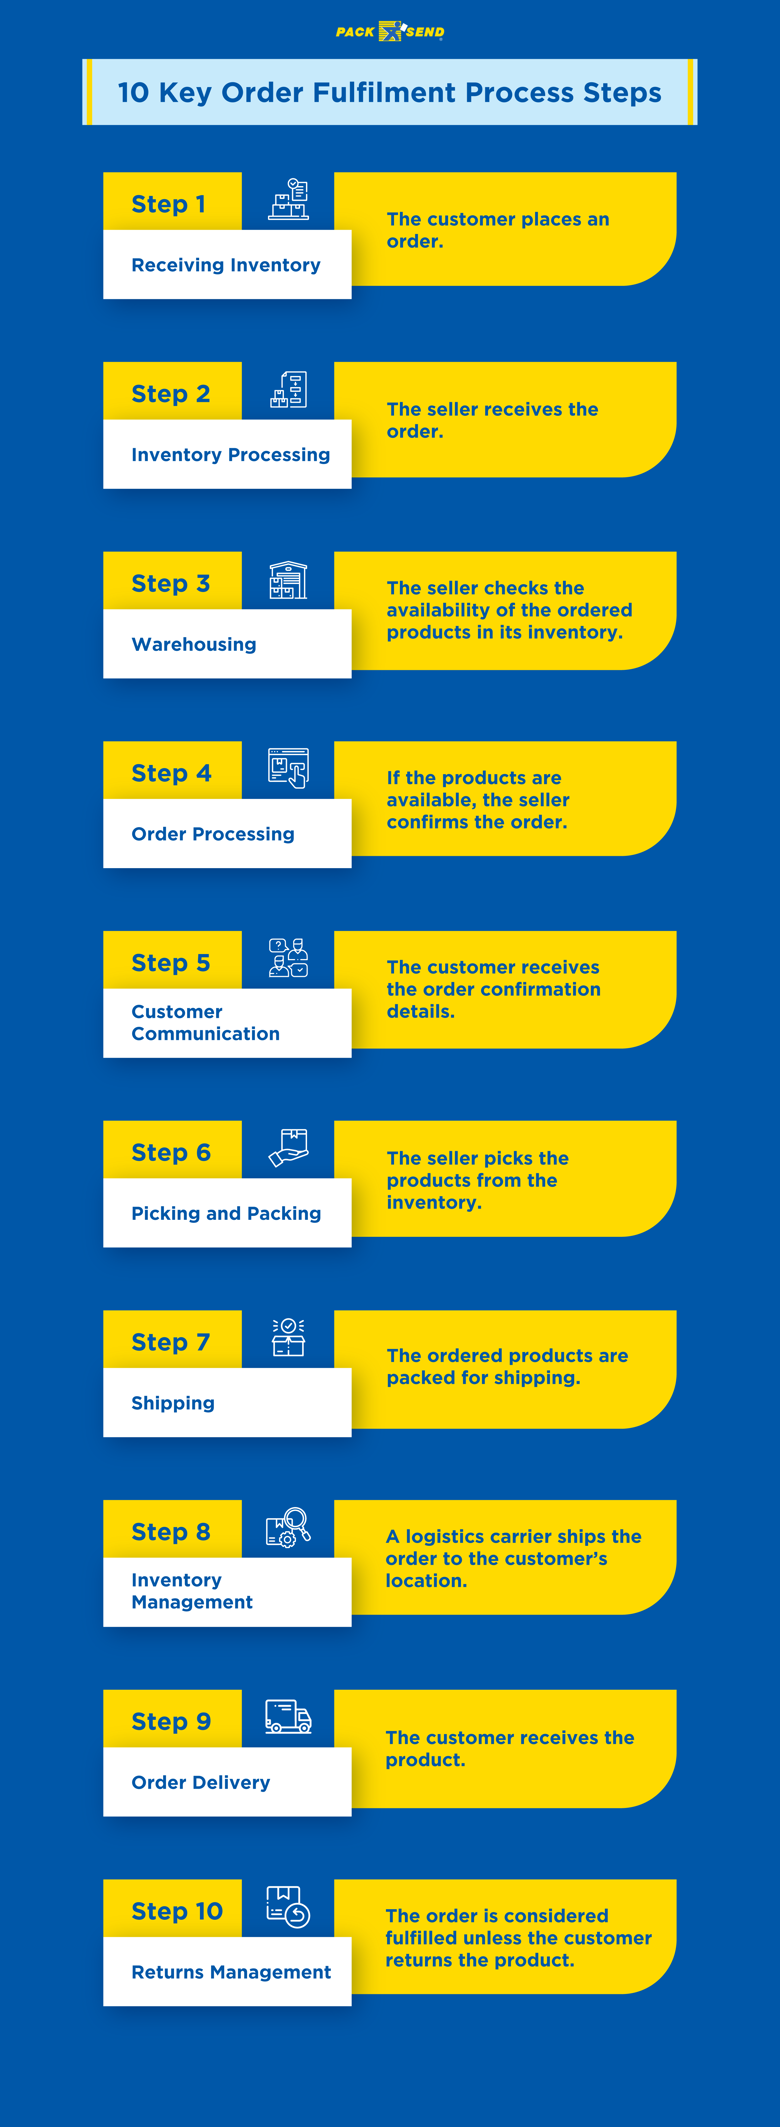 Ten key order fulfilment process steps